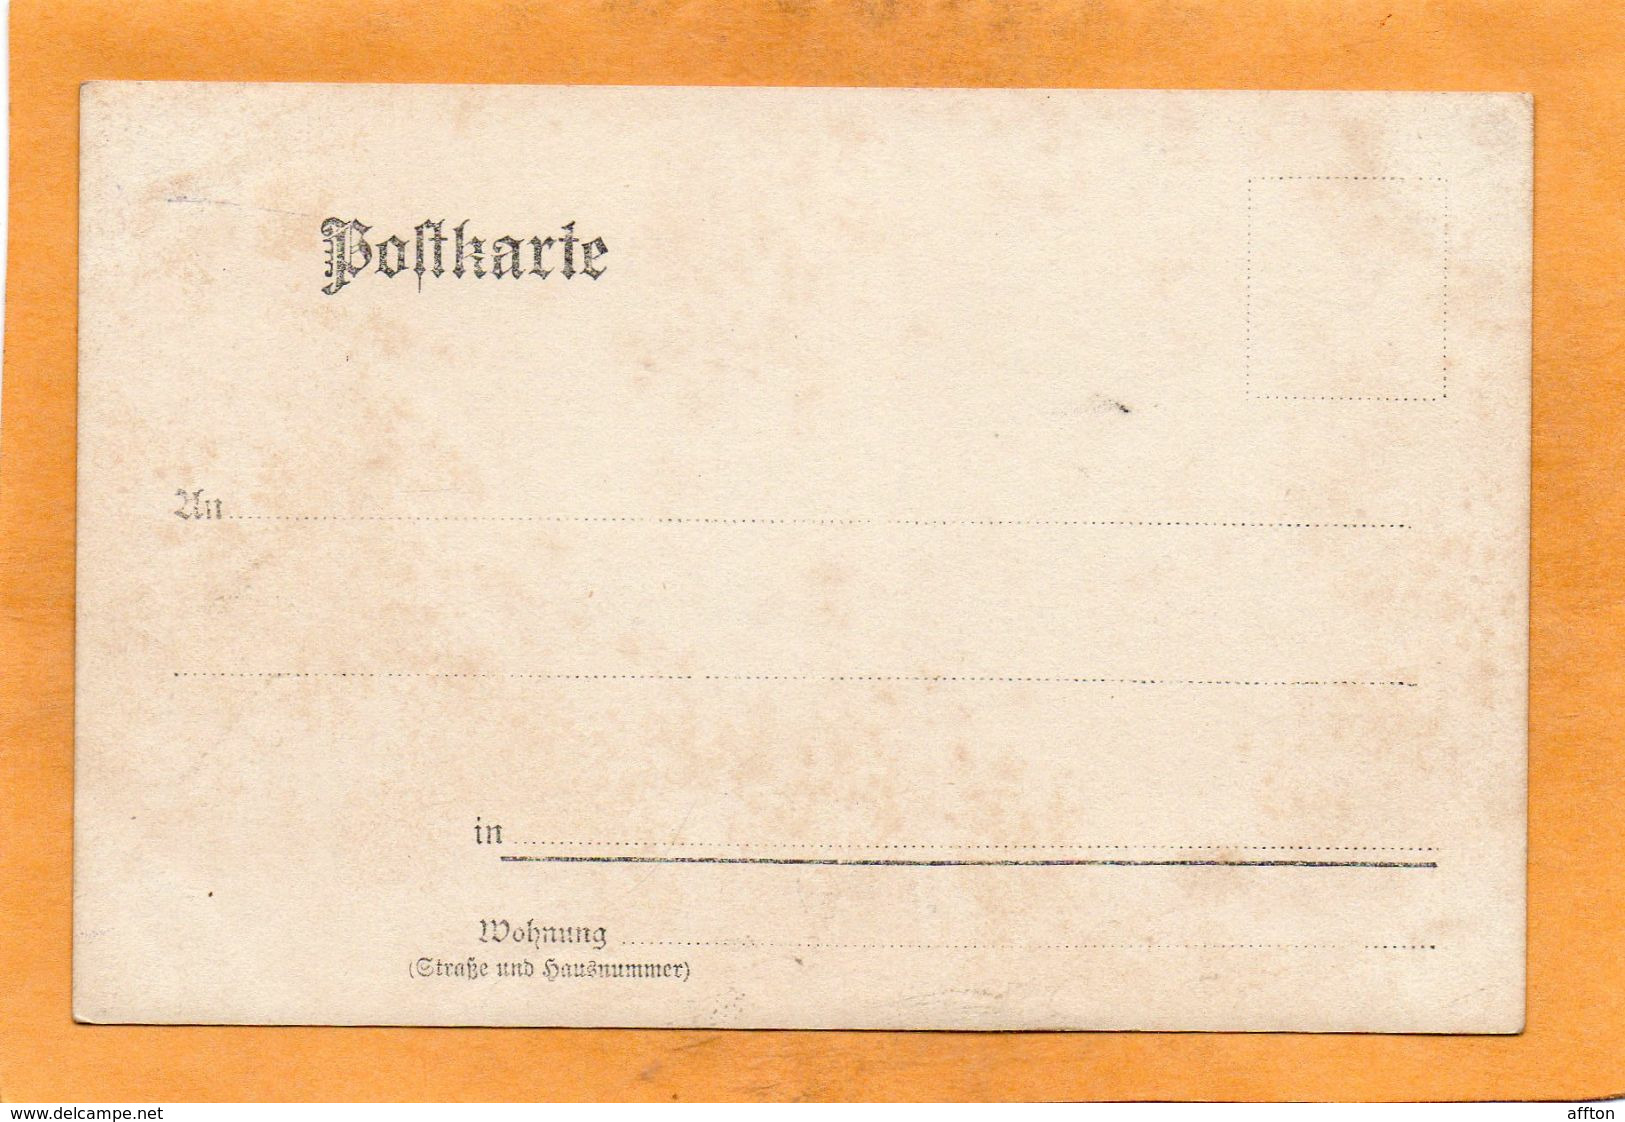 Possneck Germany 1899 Postcard - Poessneck